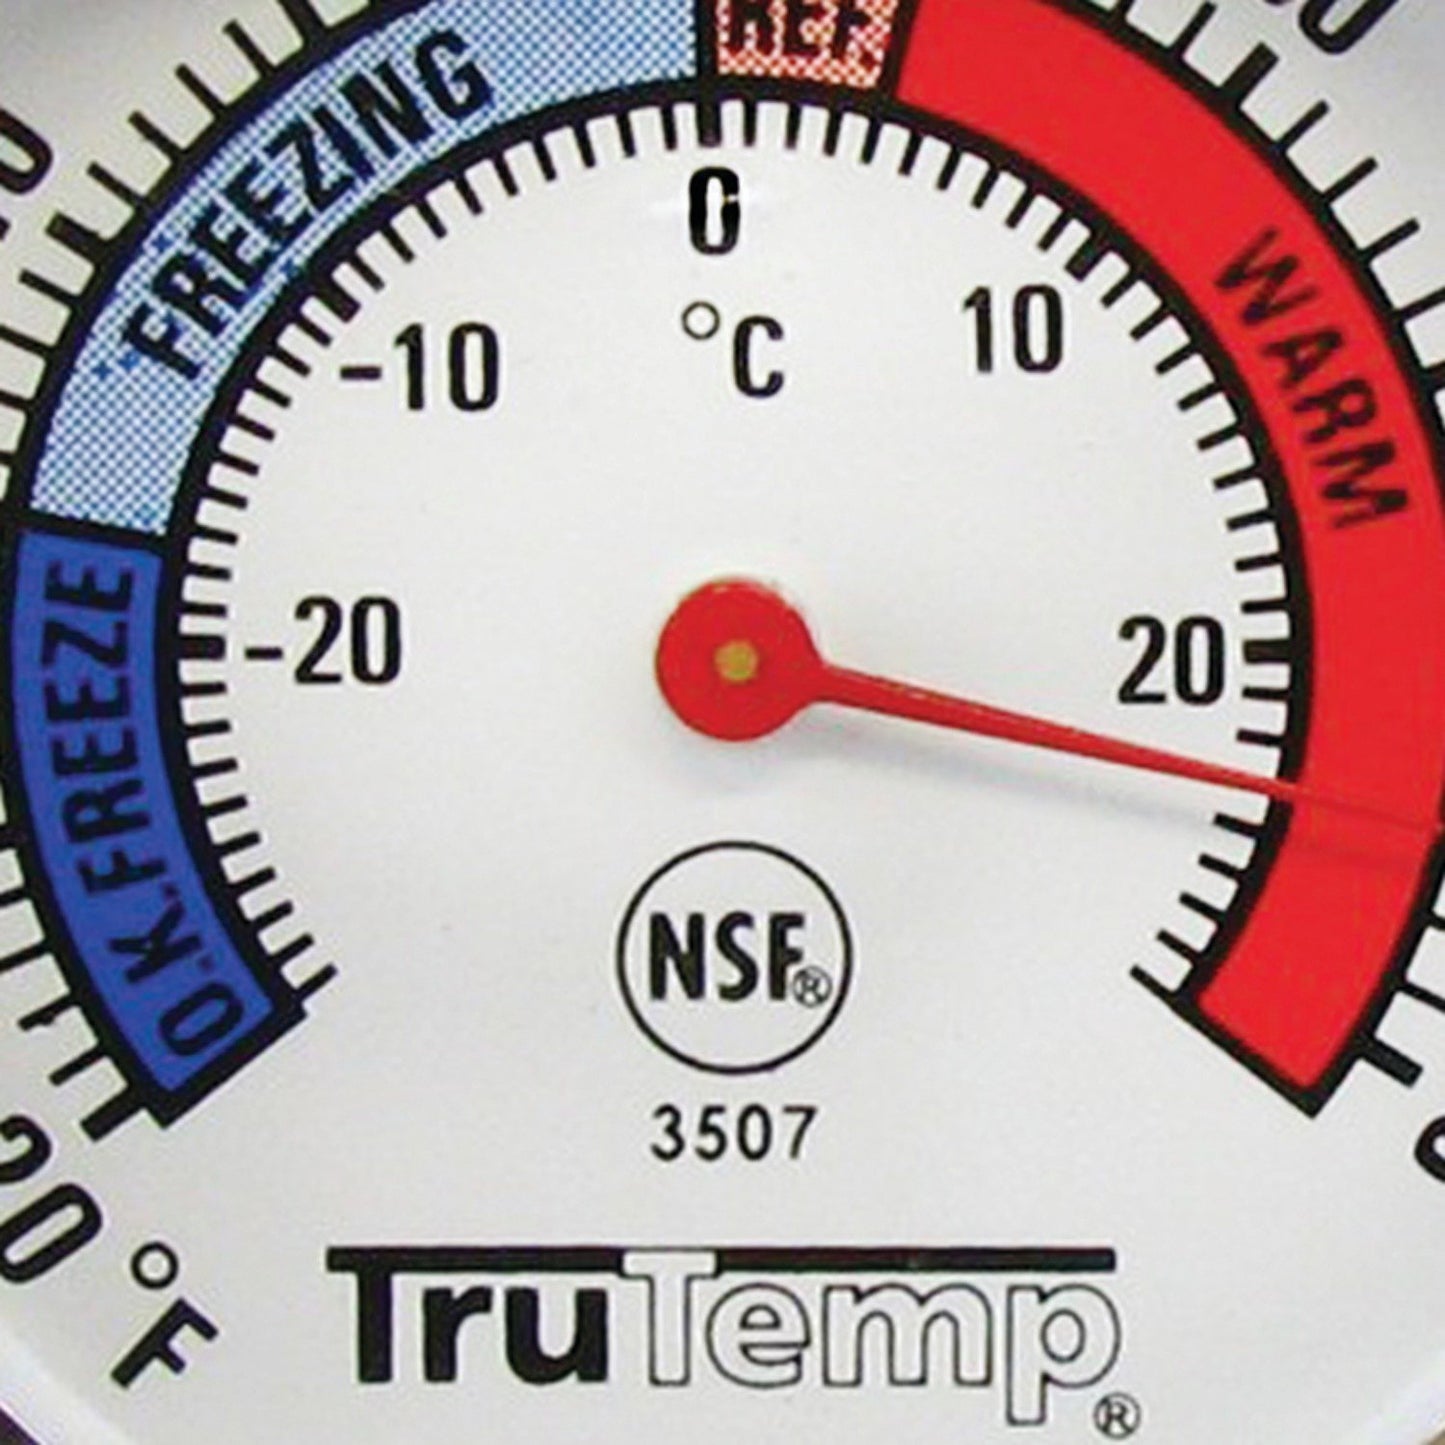 TAYLOR 3507 Freezer/Refrigerator Thermometer